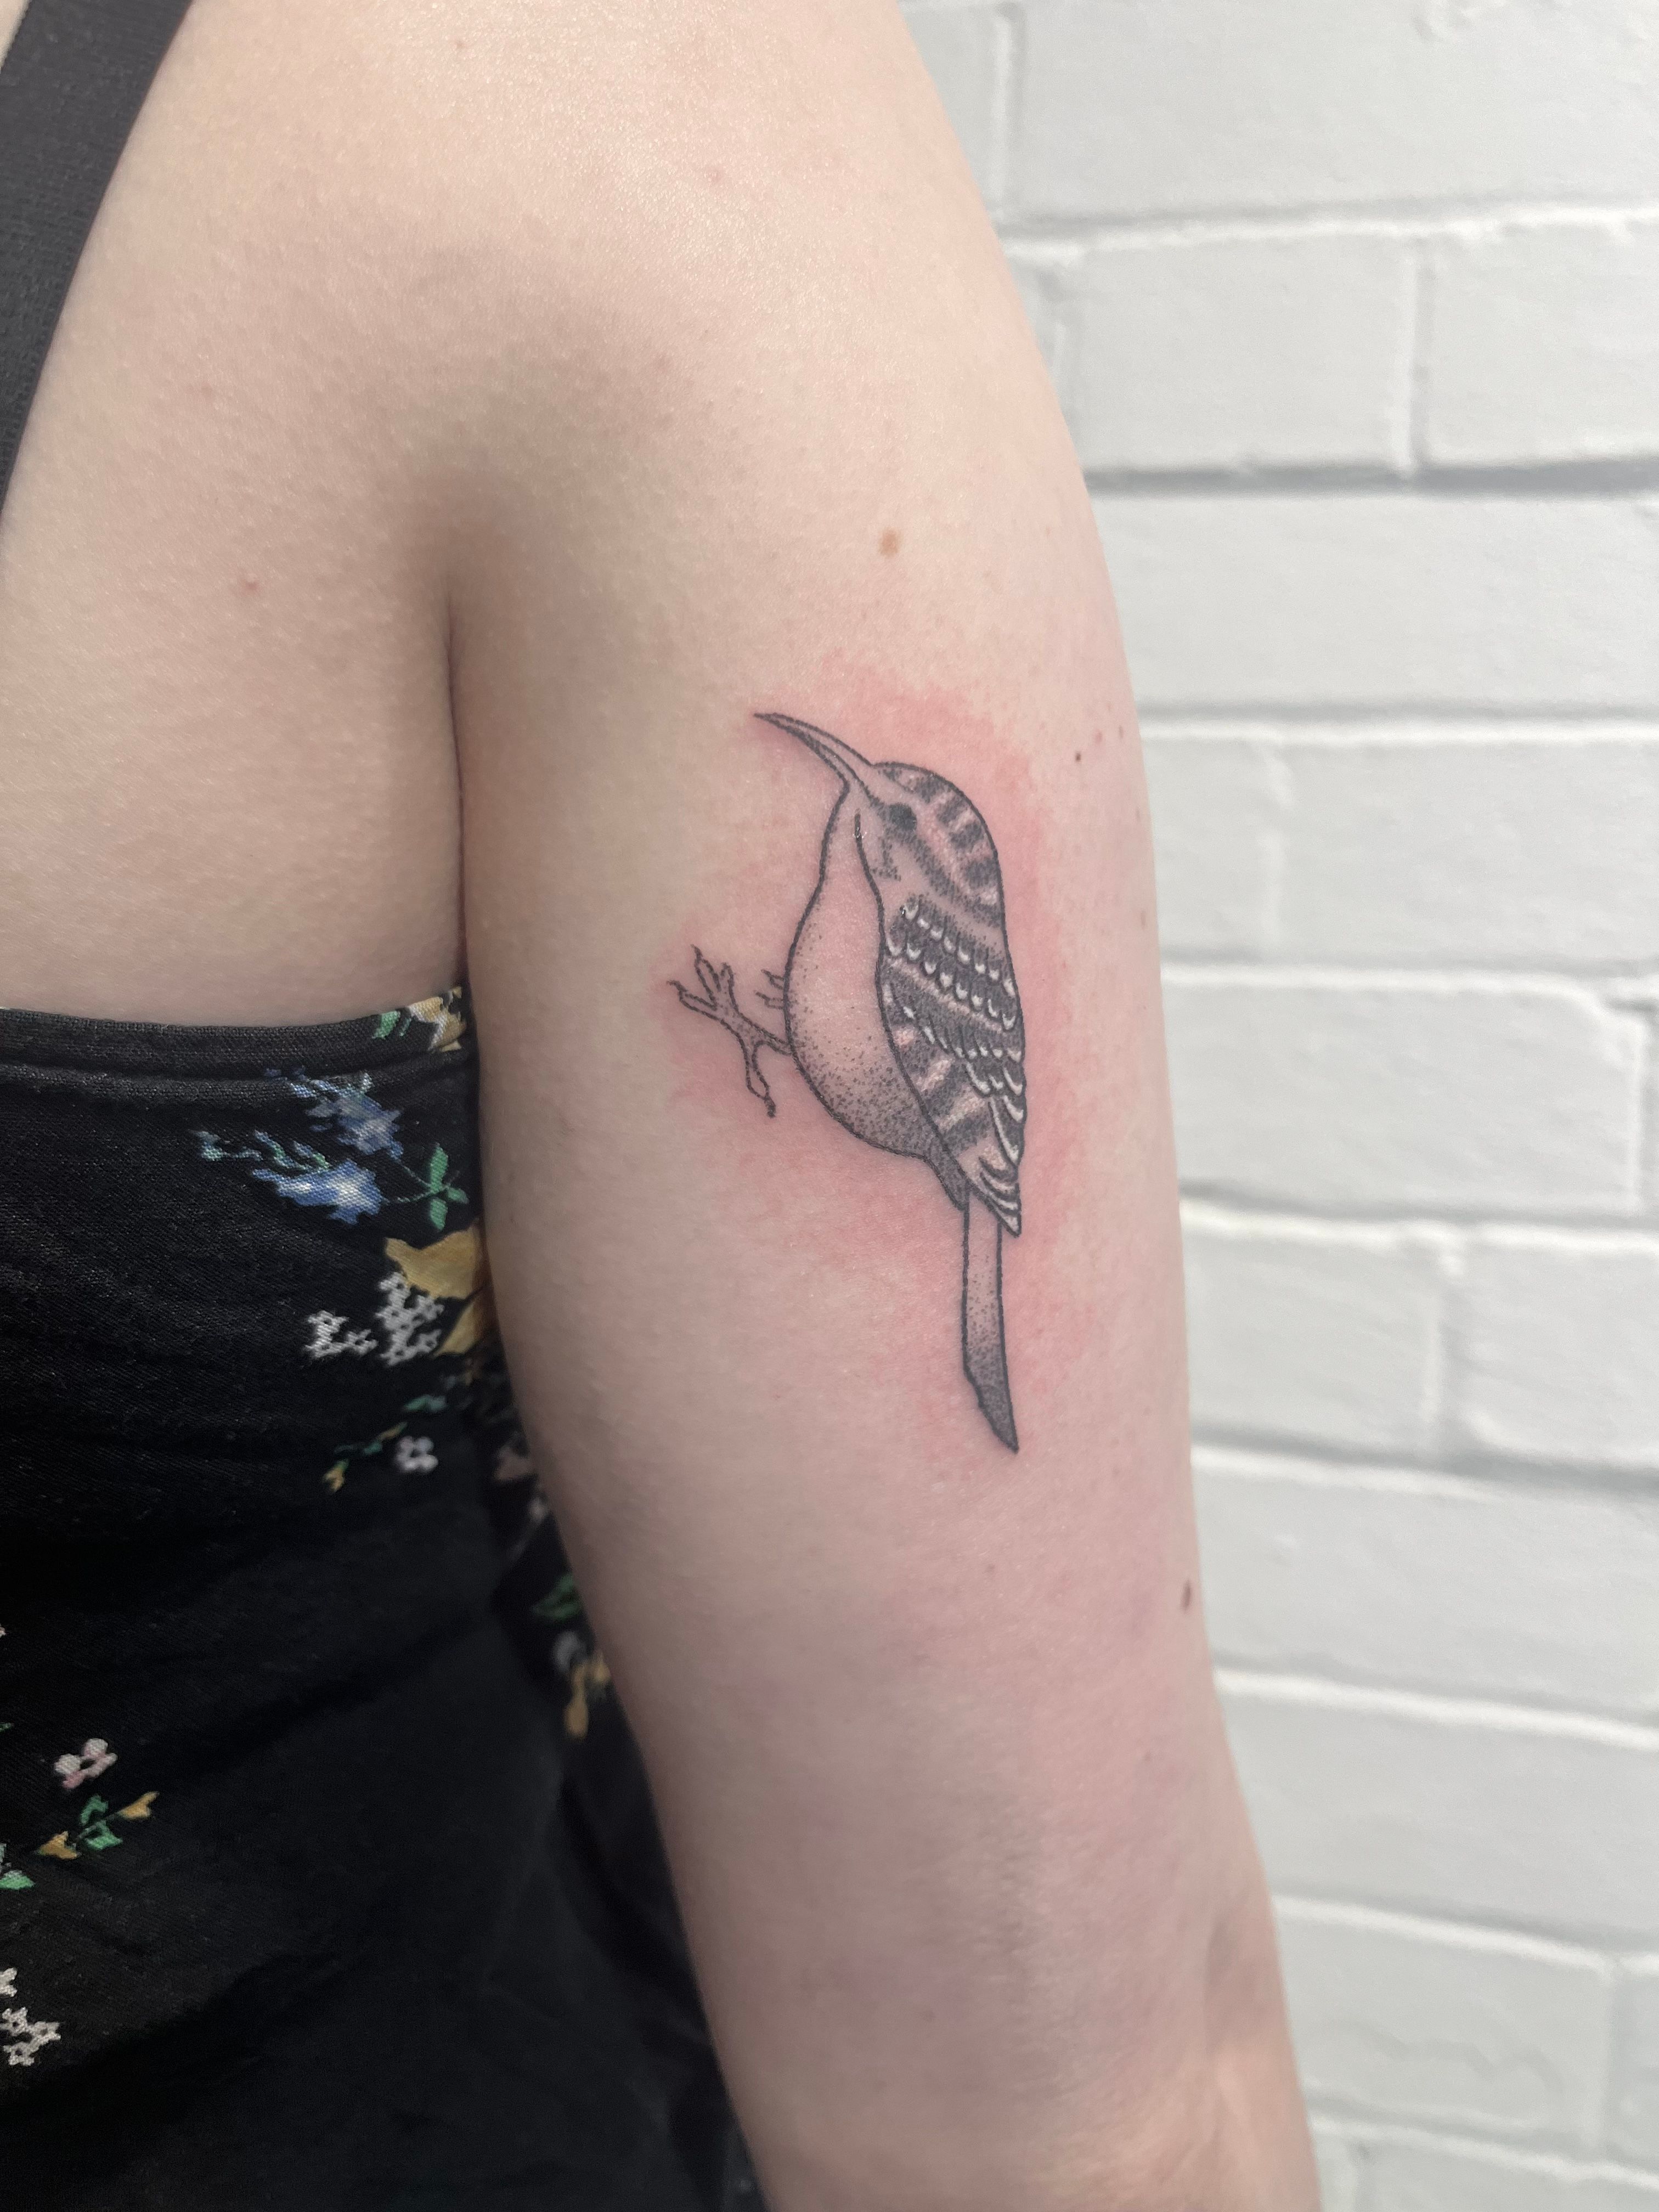 Bird Fly Tattoo on Arm - Best Tattoo Ideas Gallery